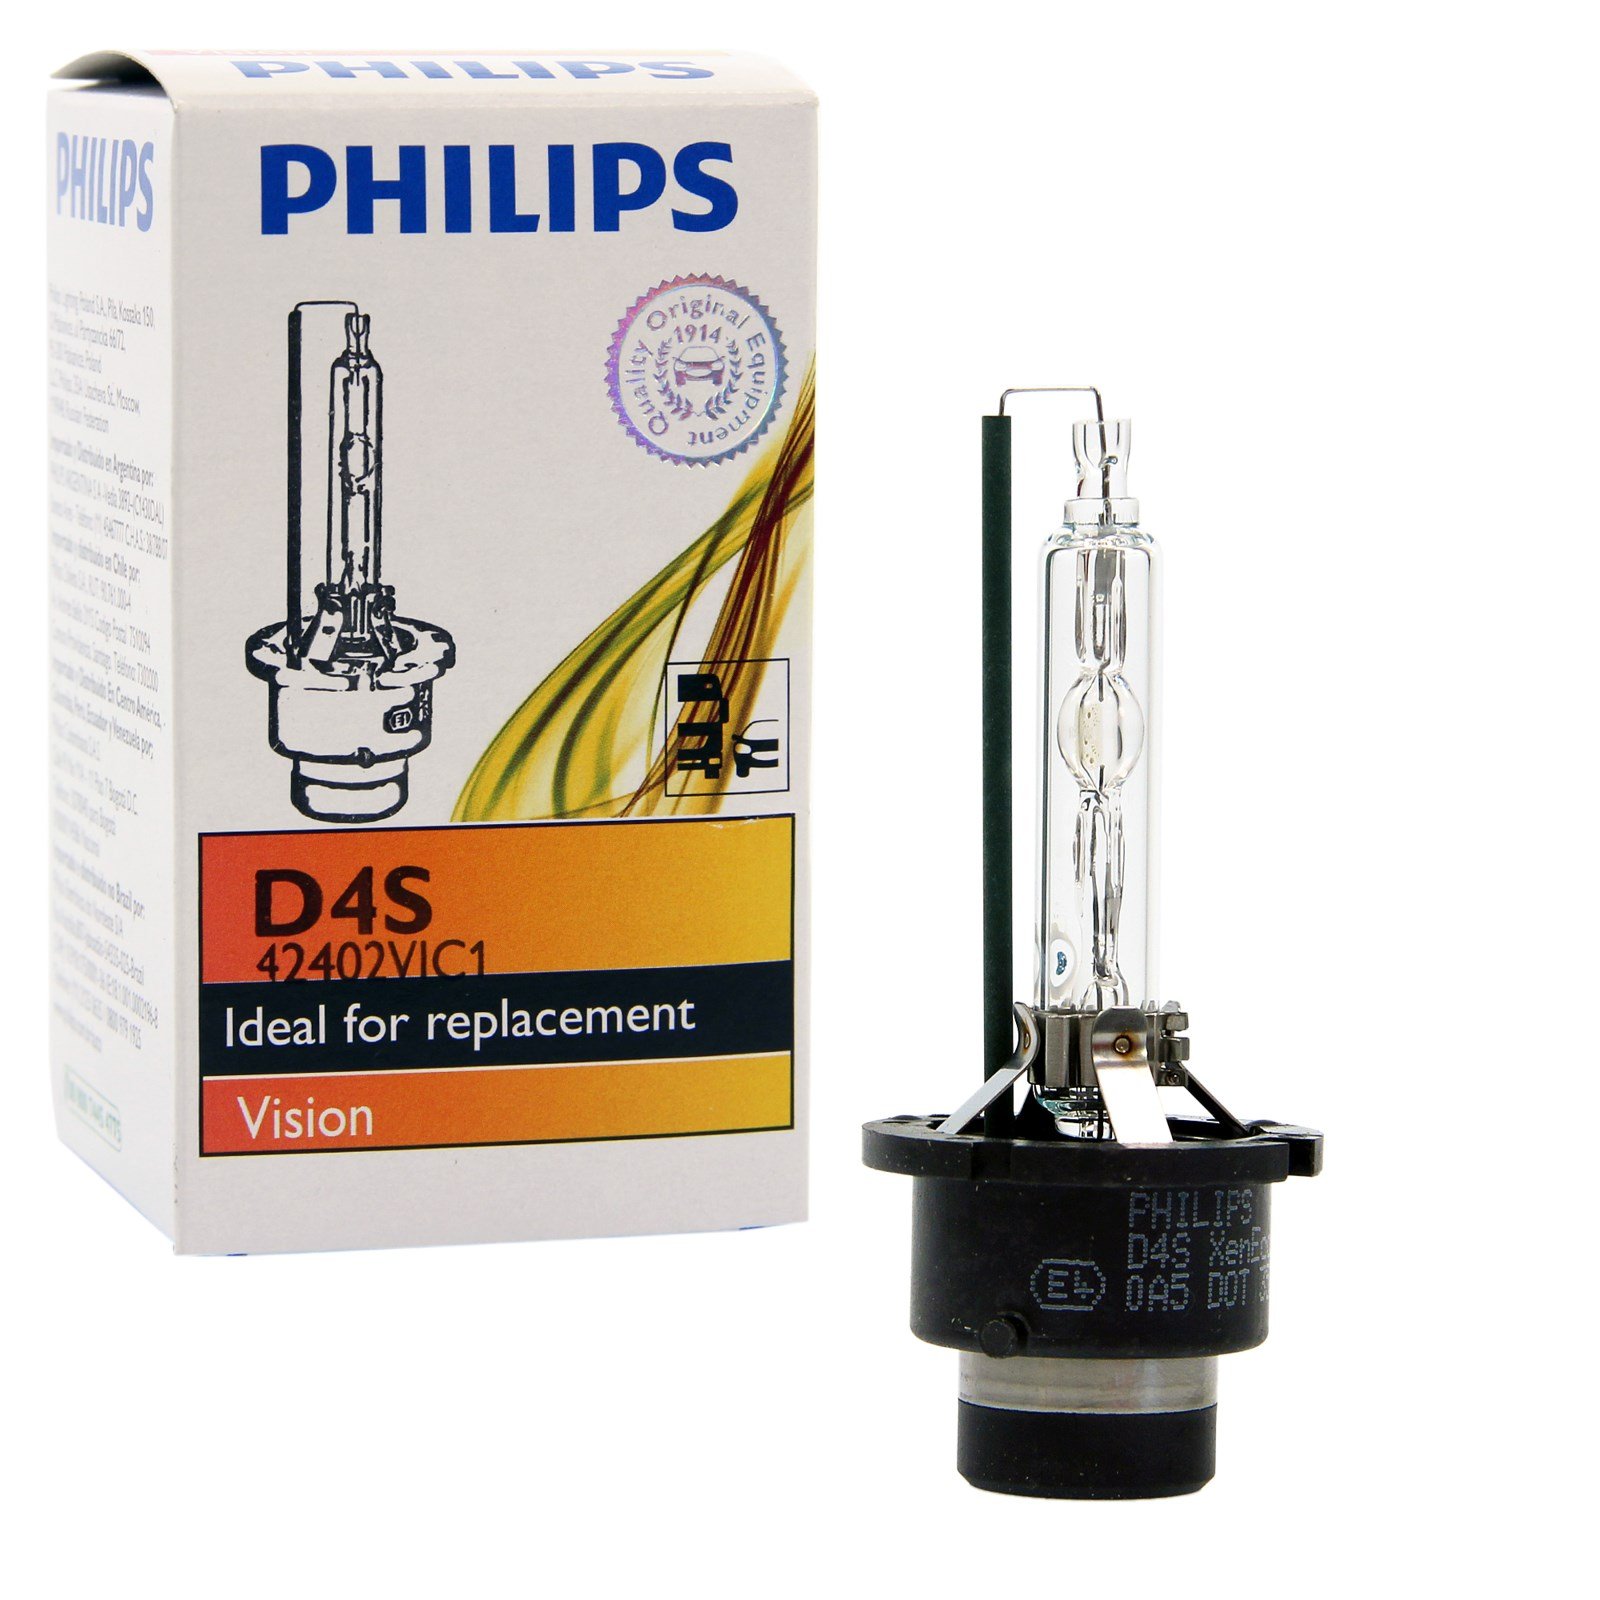 PHILIPS 42402VIC1 Glühlampe Xenon Vision von Philips